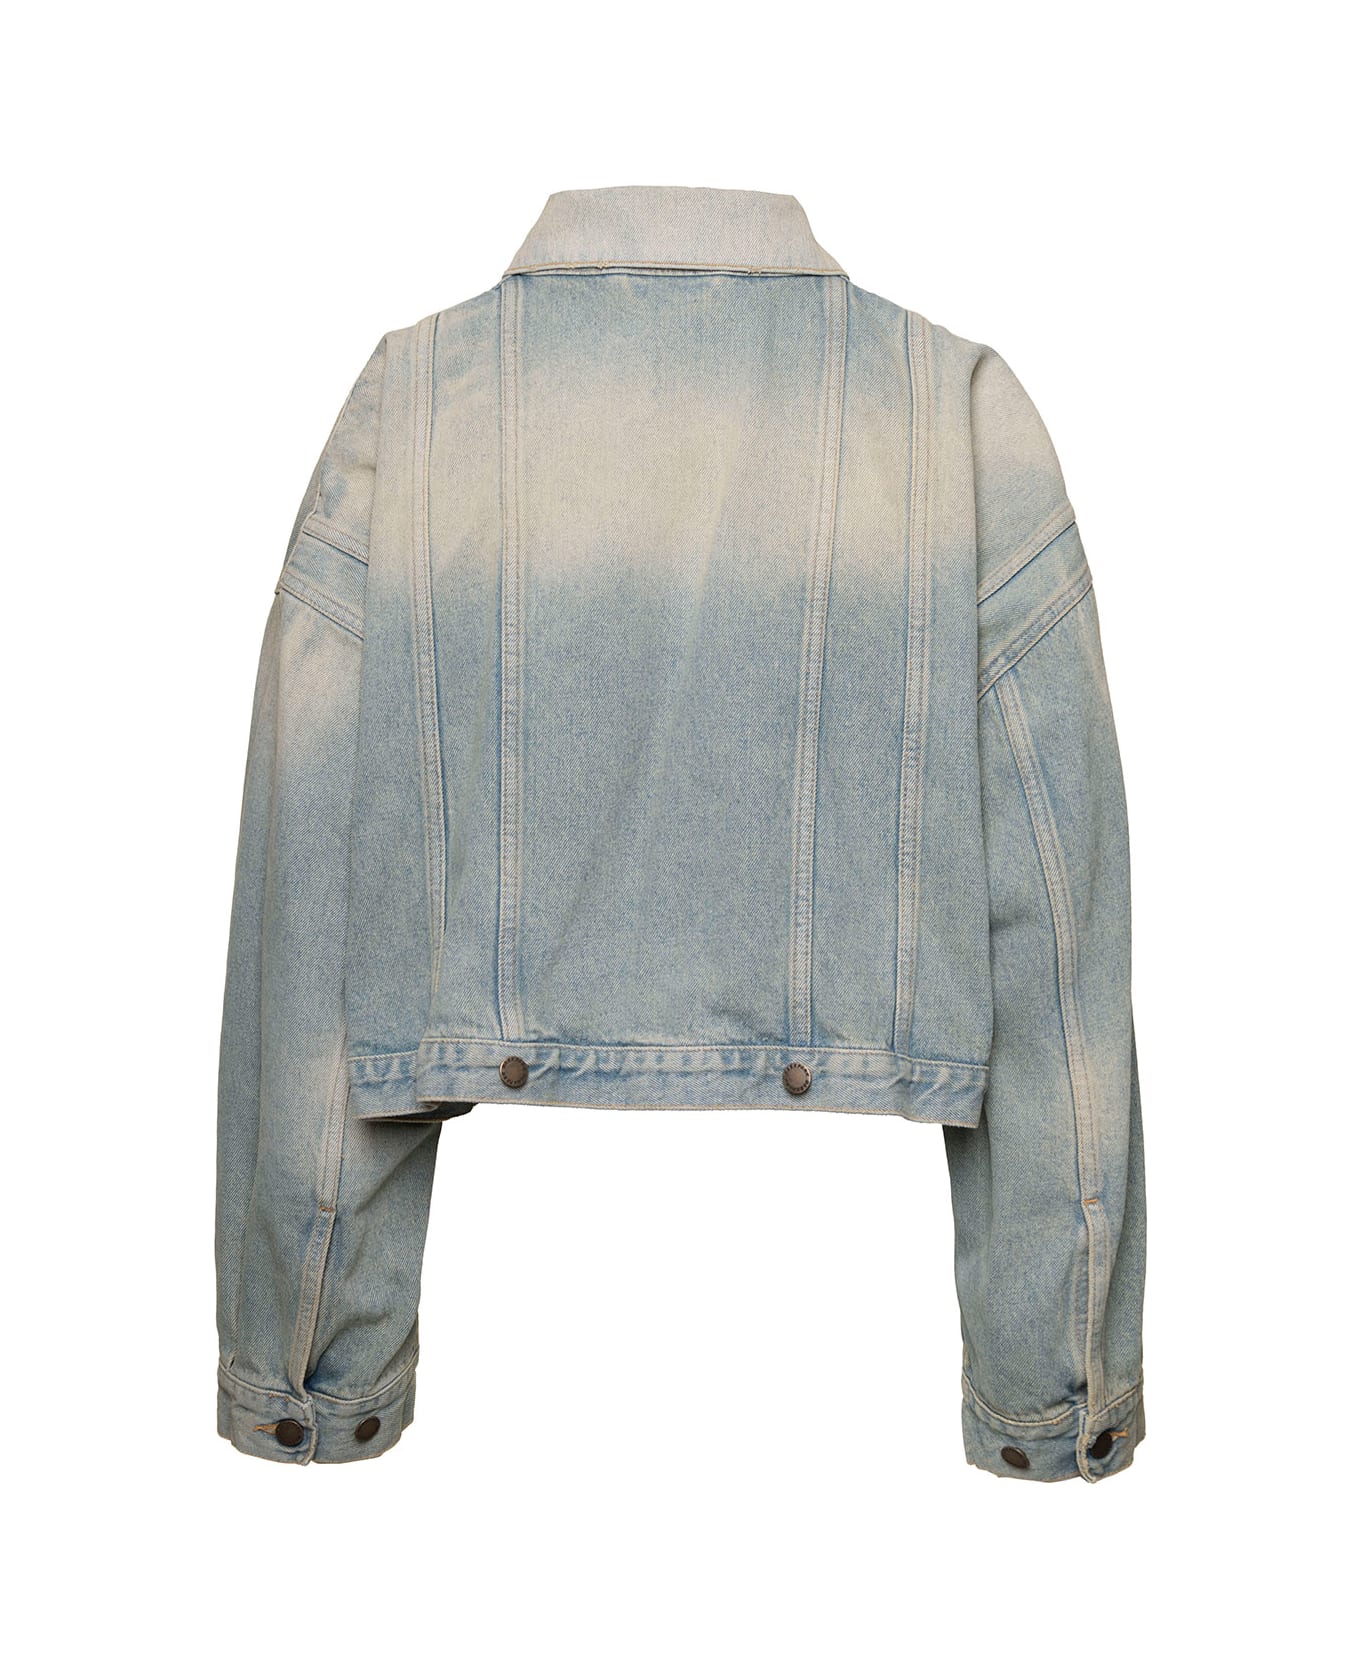 DARKPARK 'gigi' Light Blue Cropped Jacket With Bleach Effect In Cotton Denim Woman - Light blue